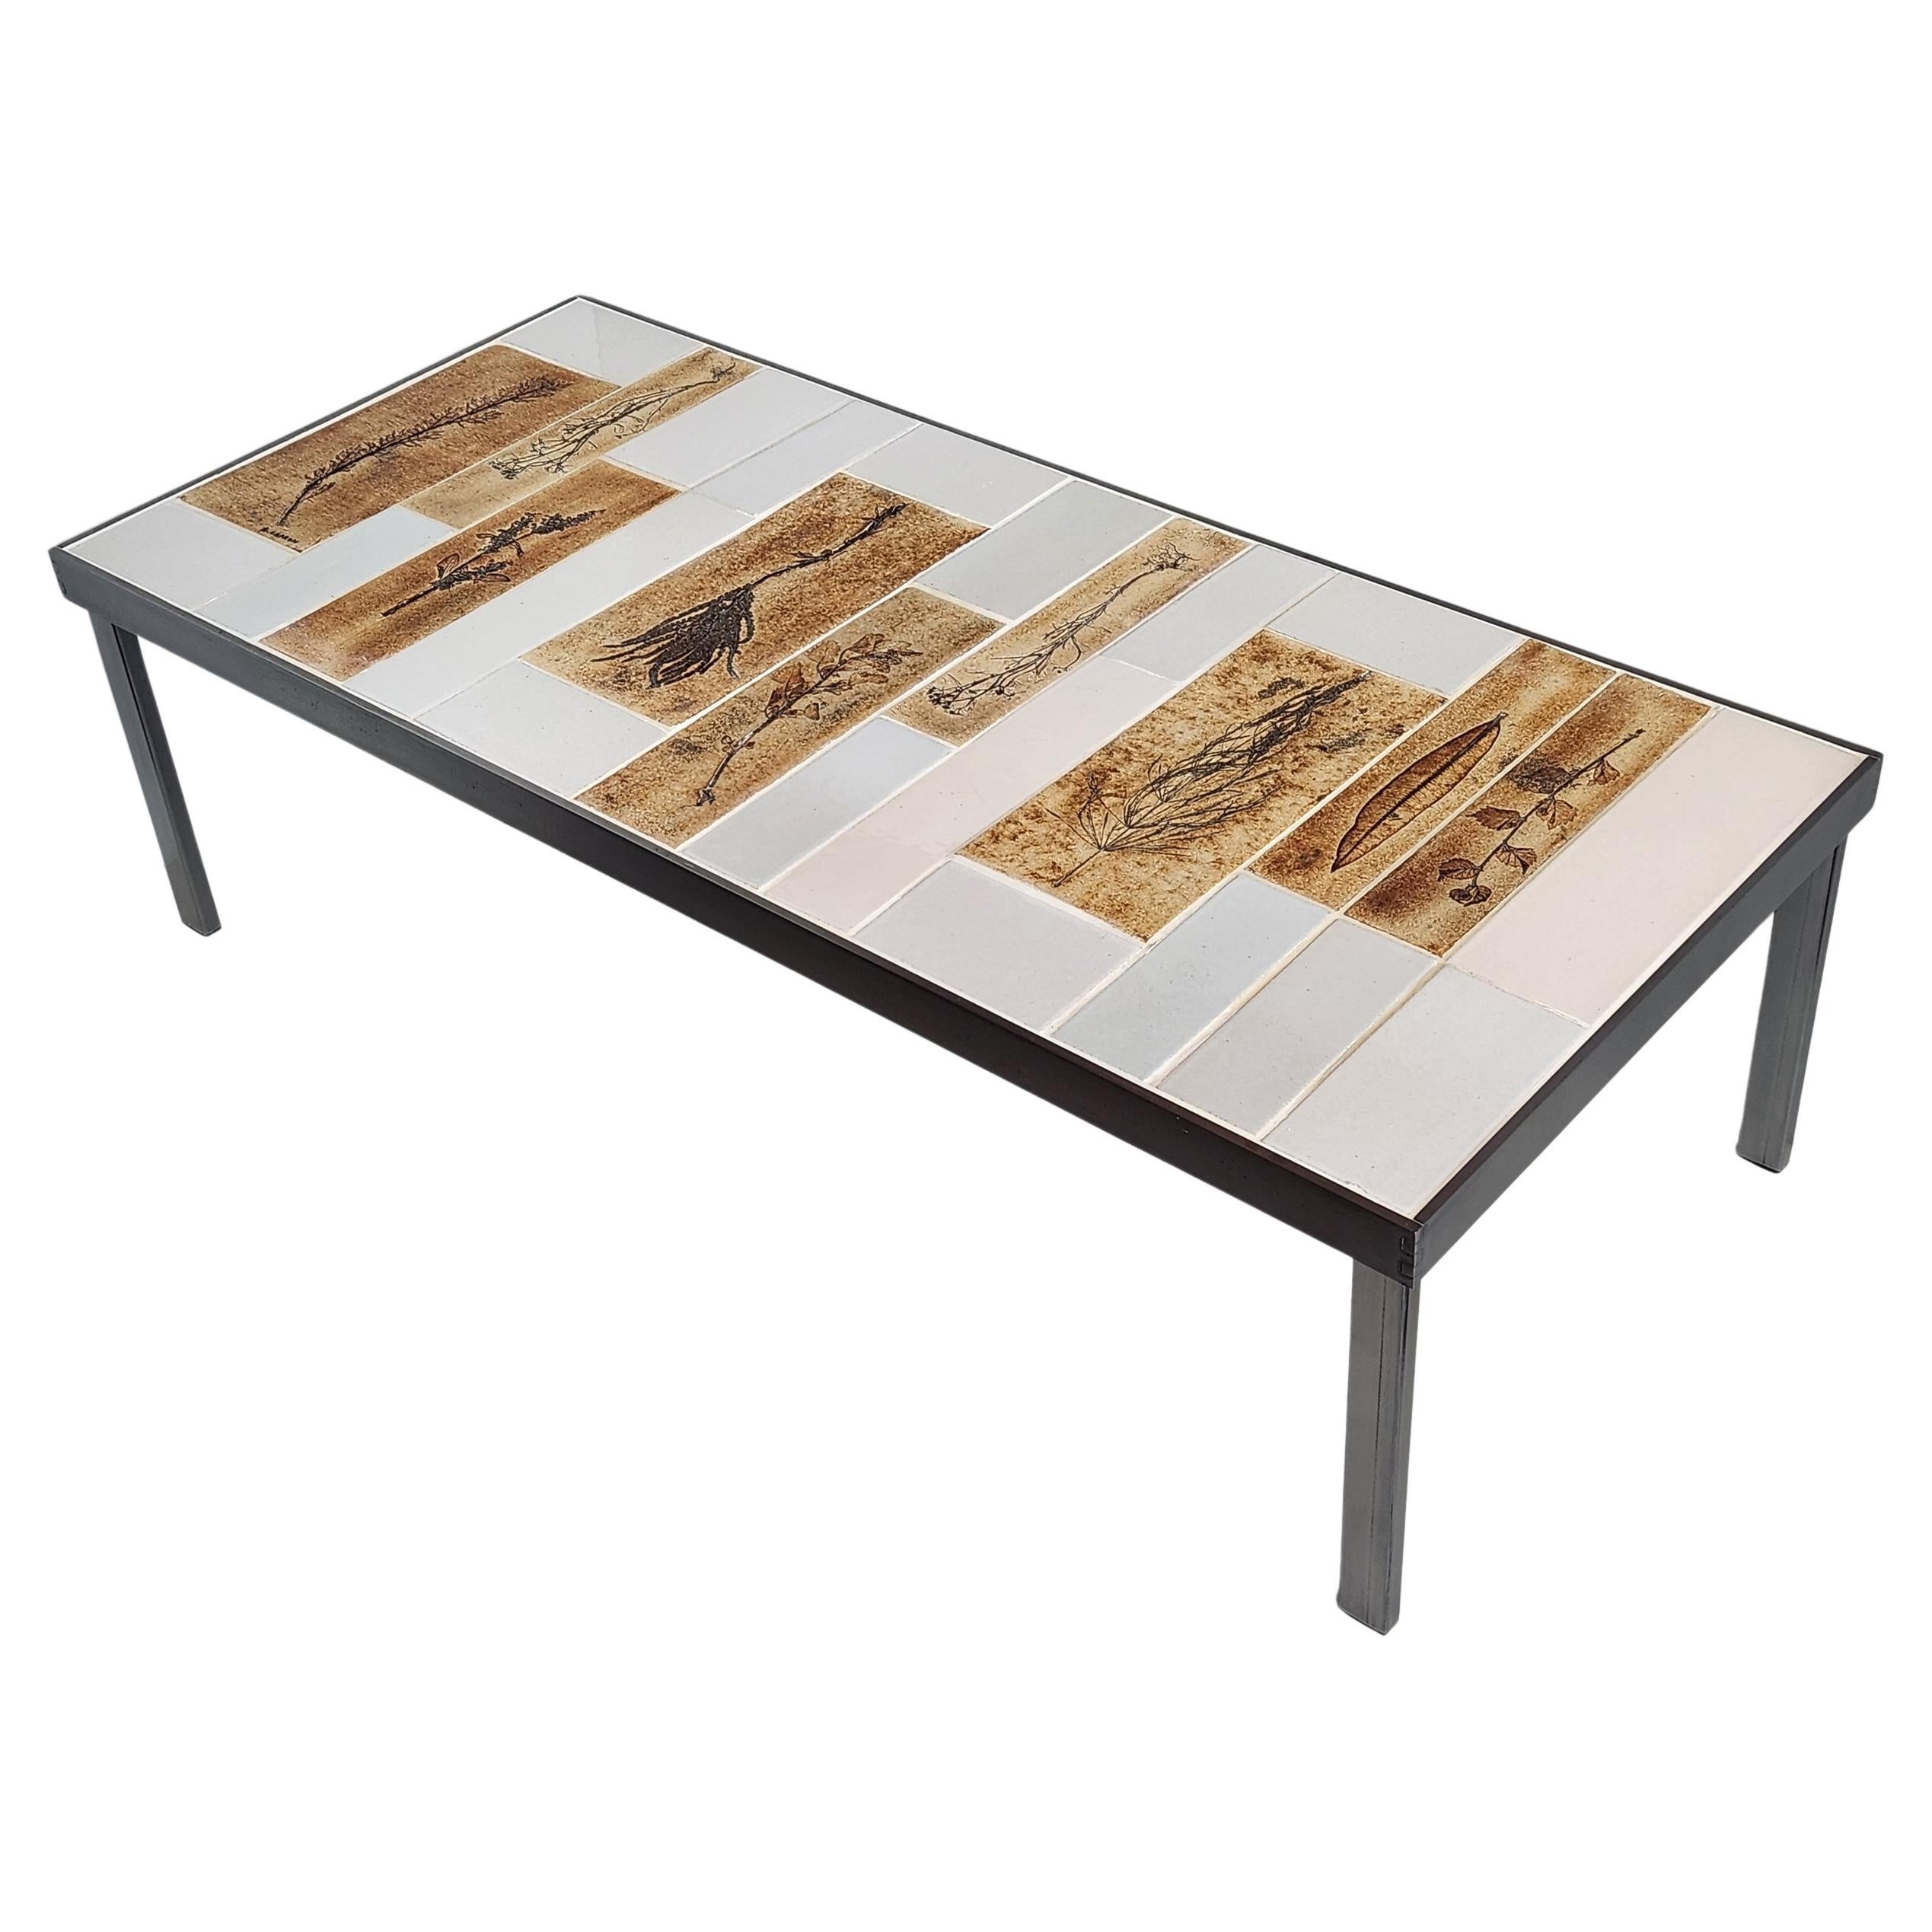 Roger Capron - Coffee Table, Garrigue/White Ceramic Tiles, Dovetail Metal Frame